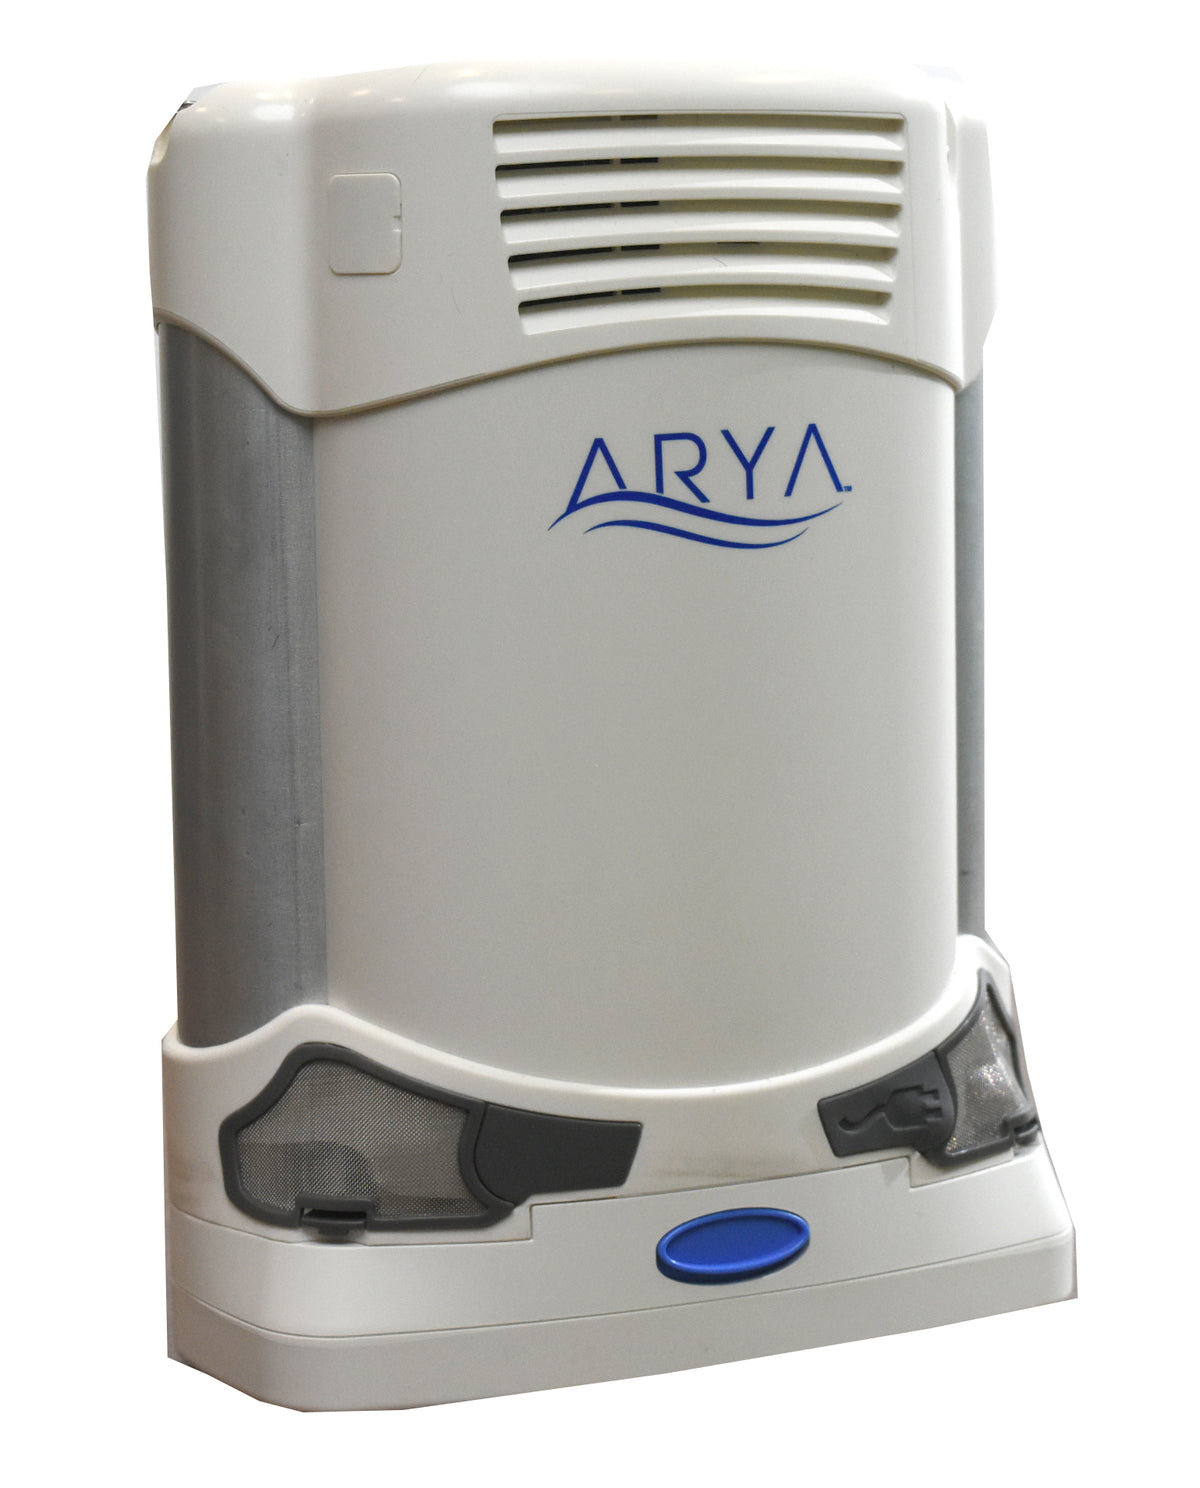 ARYA Portable Oxygen Concentrator